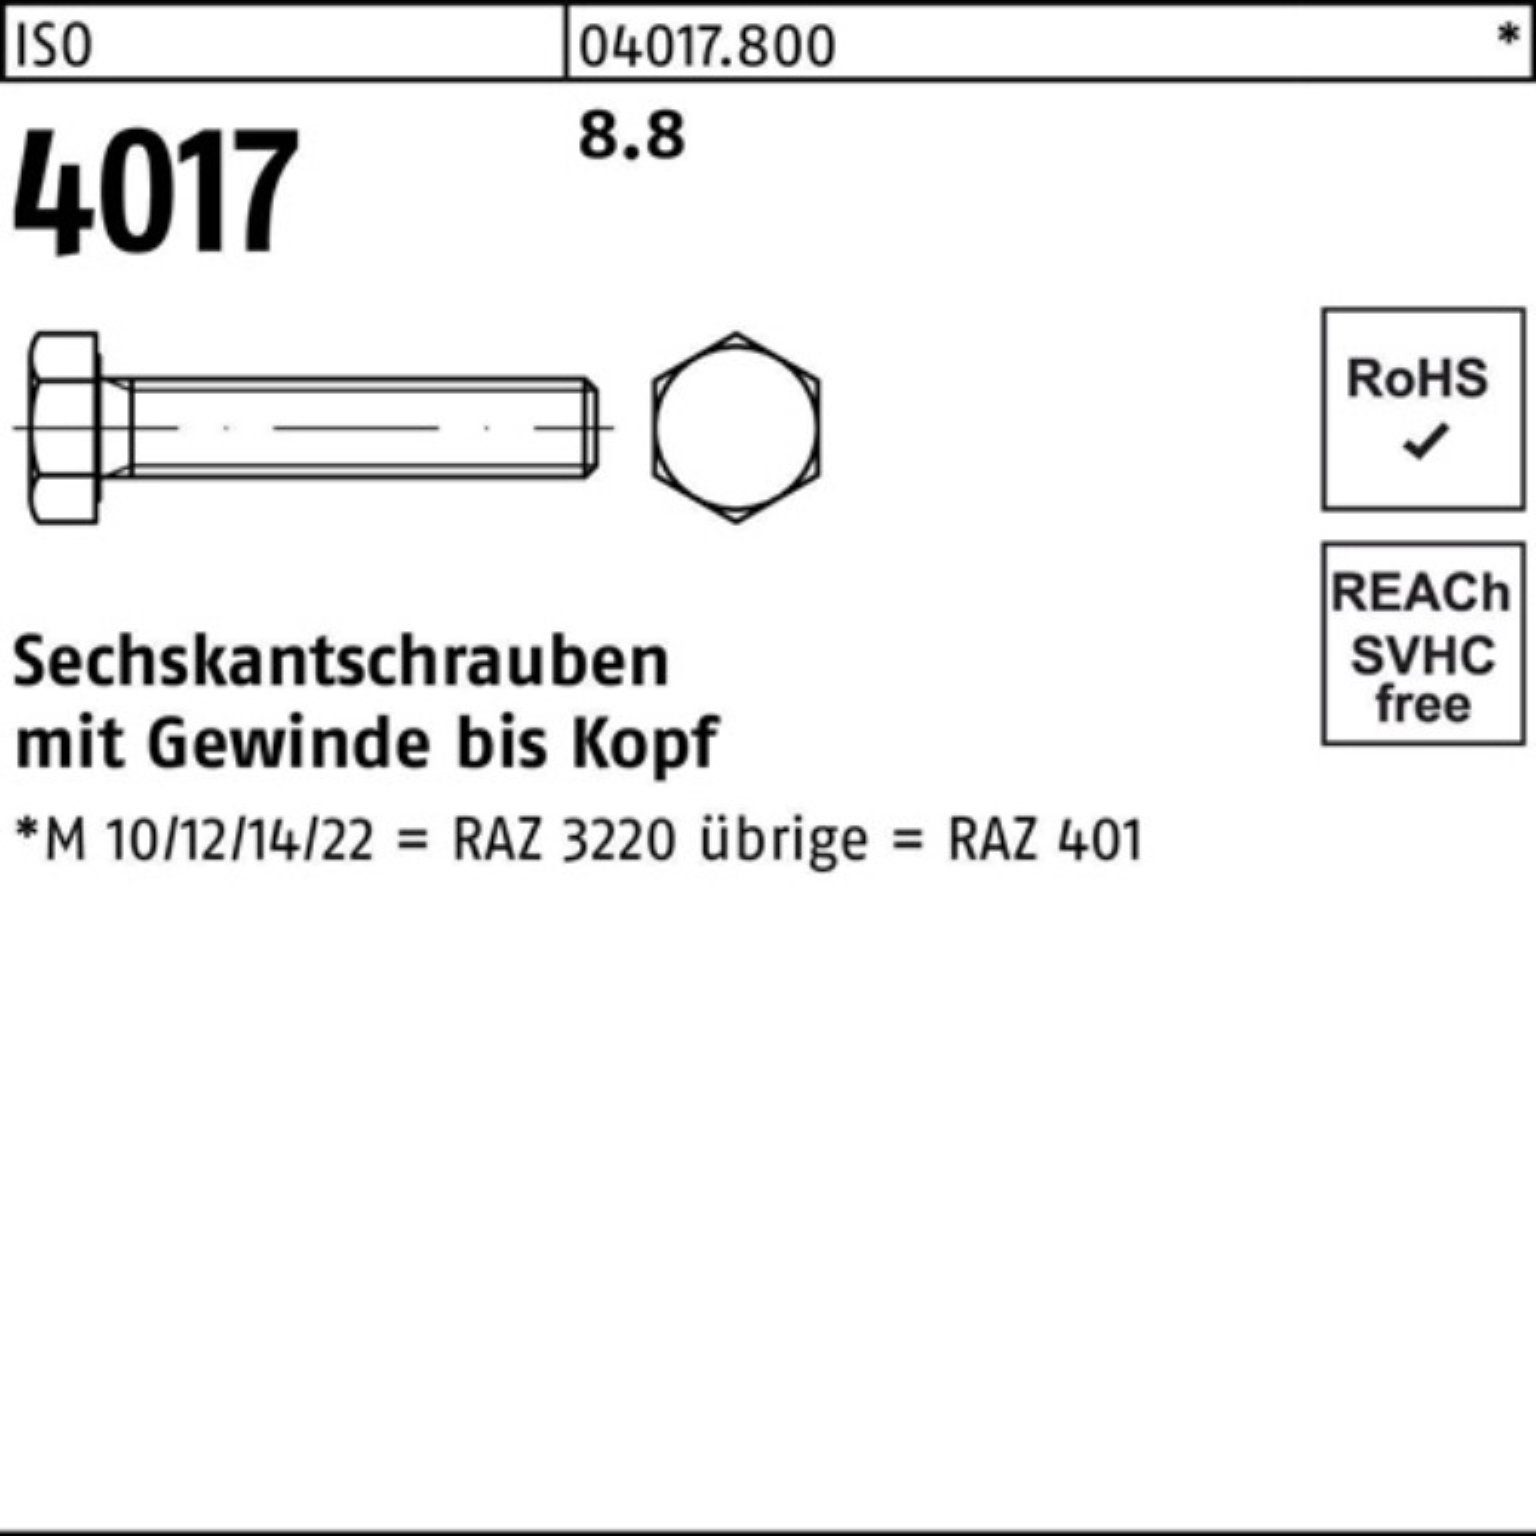 Pack Stück 4017 VG 1 ISO M48x Bufab Sechskantschraube 401 8.8 420 ISO 100er Sechskantschraube